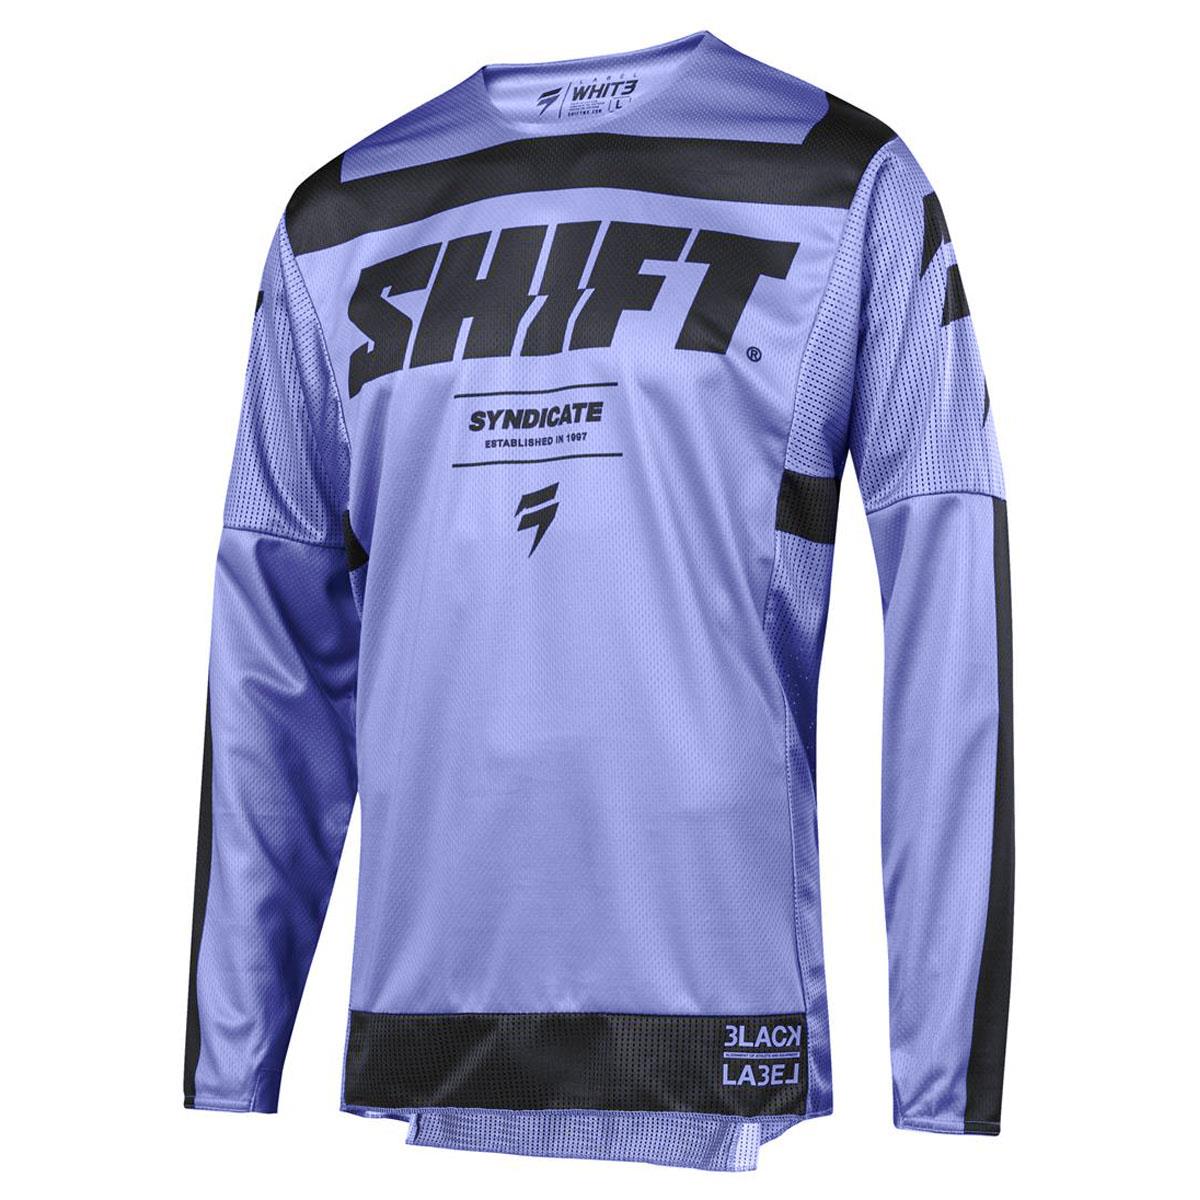 Shift Jersey 3lack Label Strike Purple